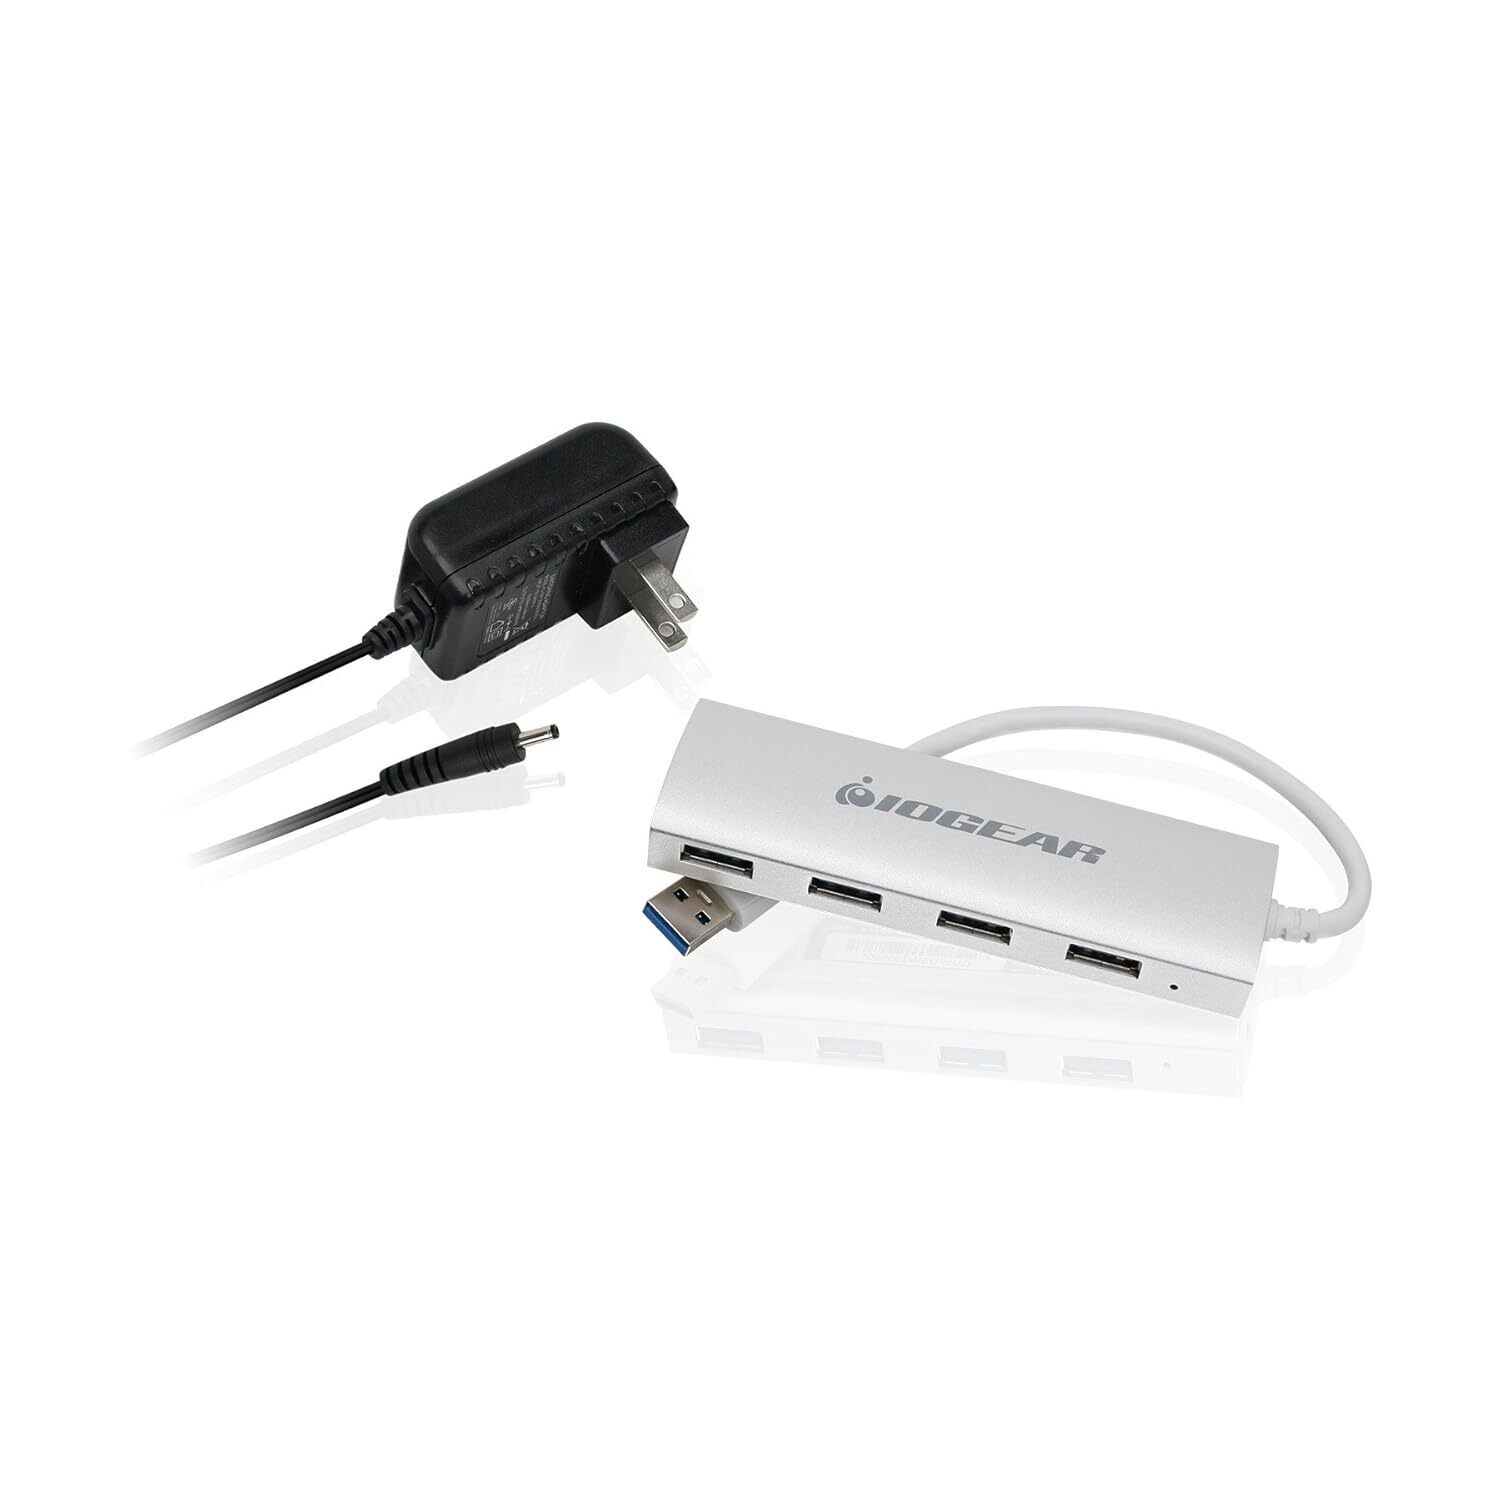 IOGEAR Powered 4 Port USB 3.0 Hub - 1 USB 3.0 In - 4 USB 3.0 Out - 5Gbps Data